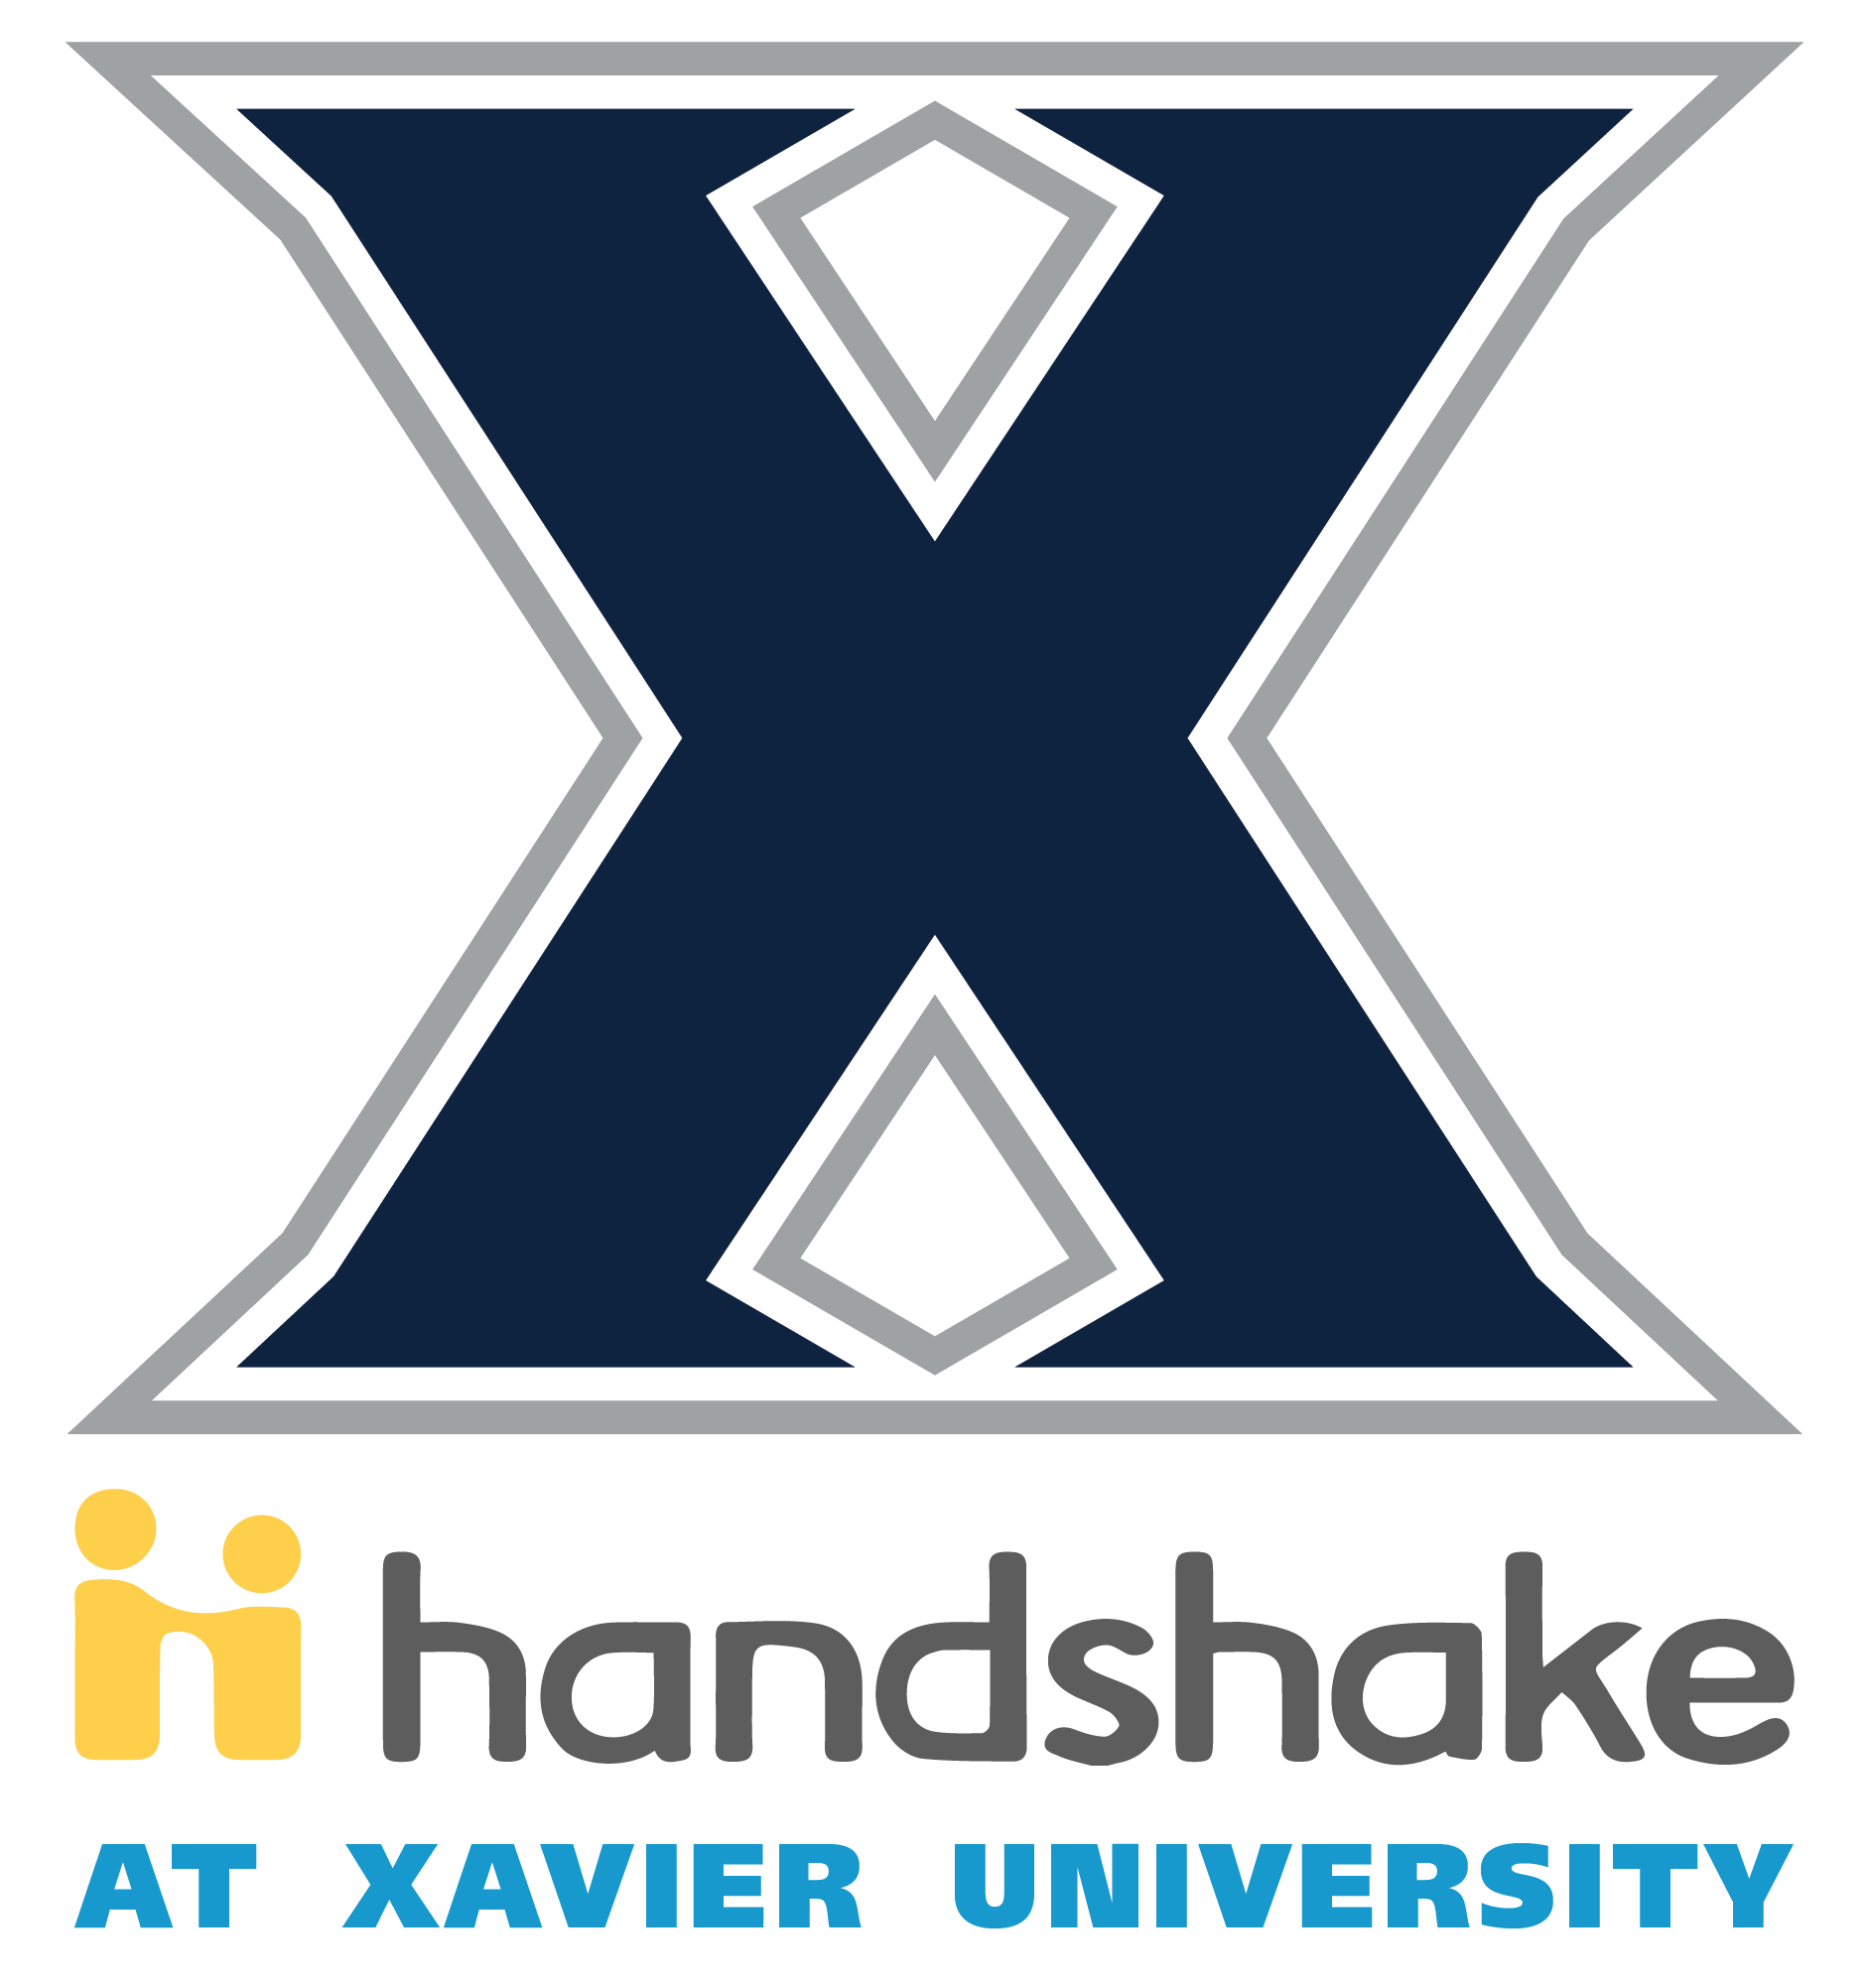 Handshake logo with Xavier logo